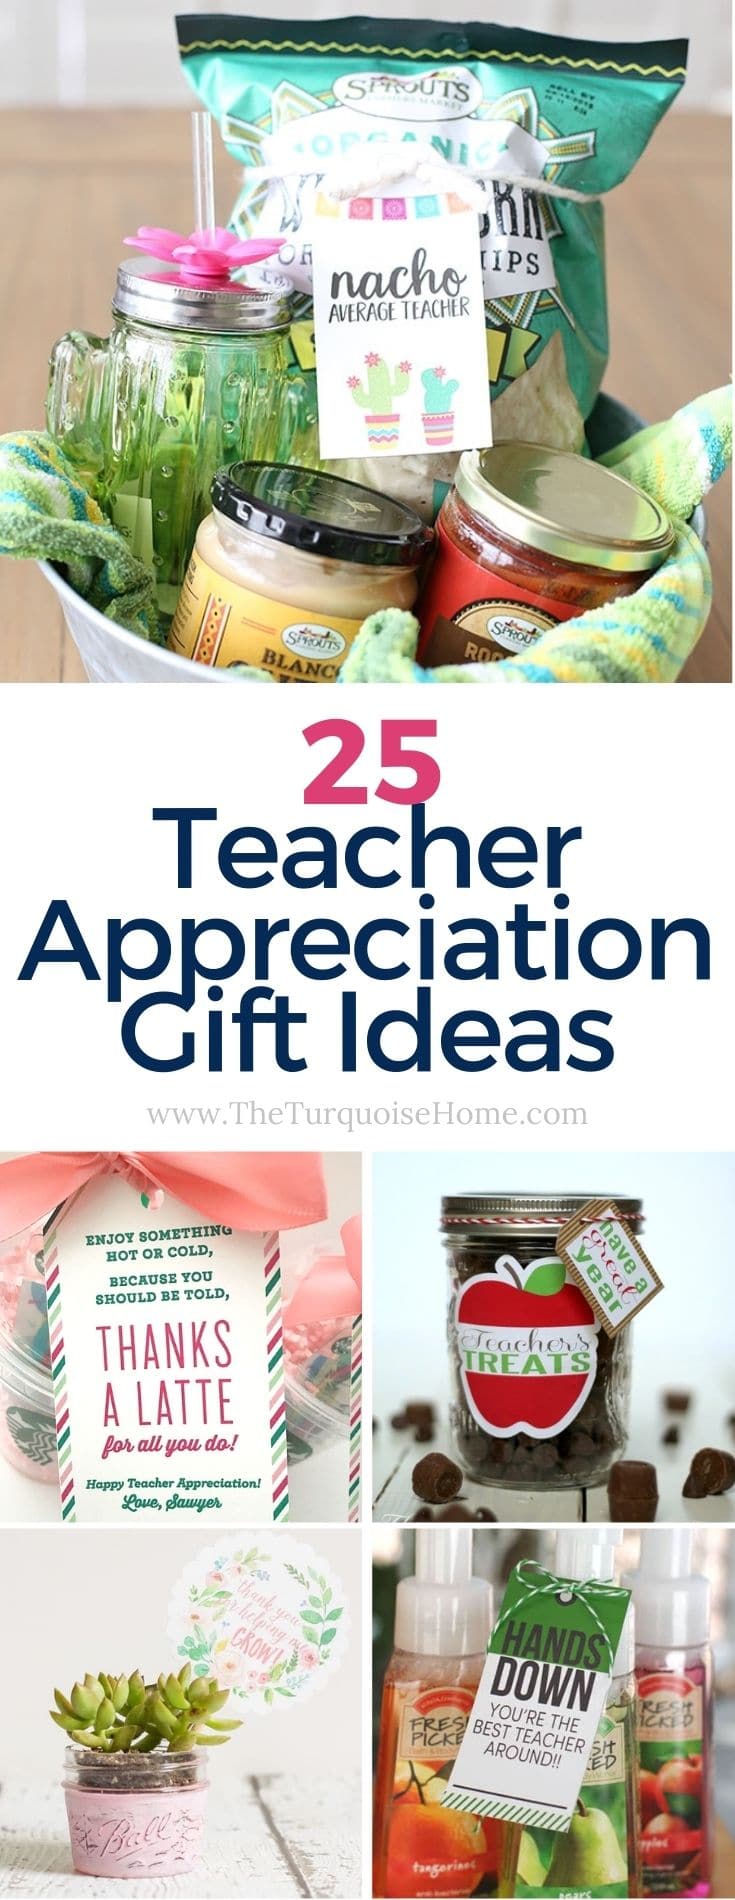 25 Teacher Appreciation Gift Ideas